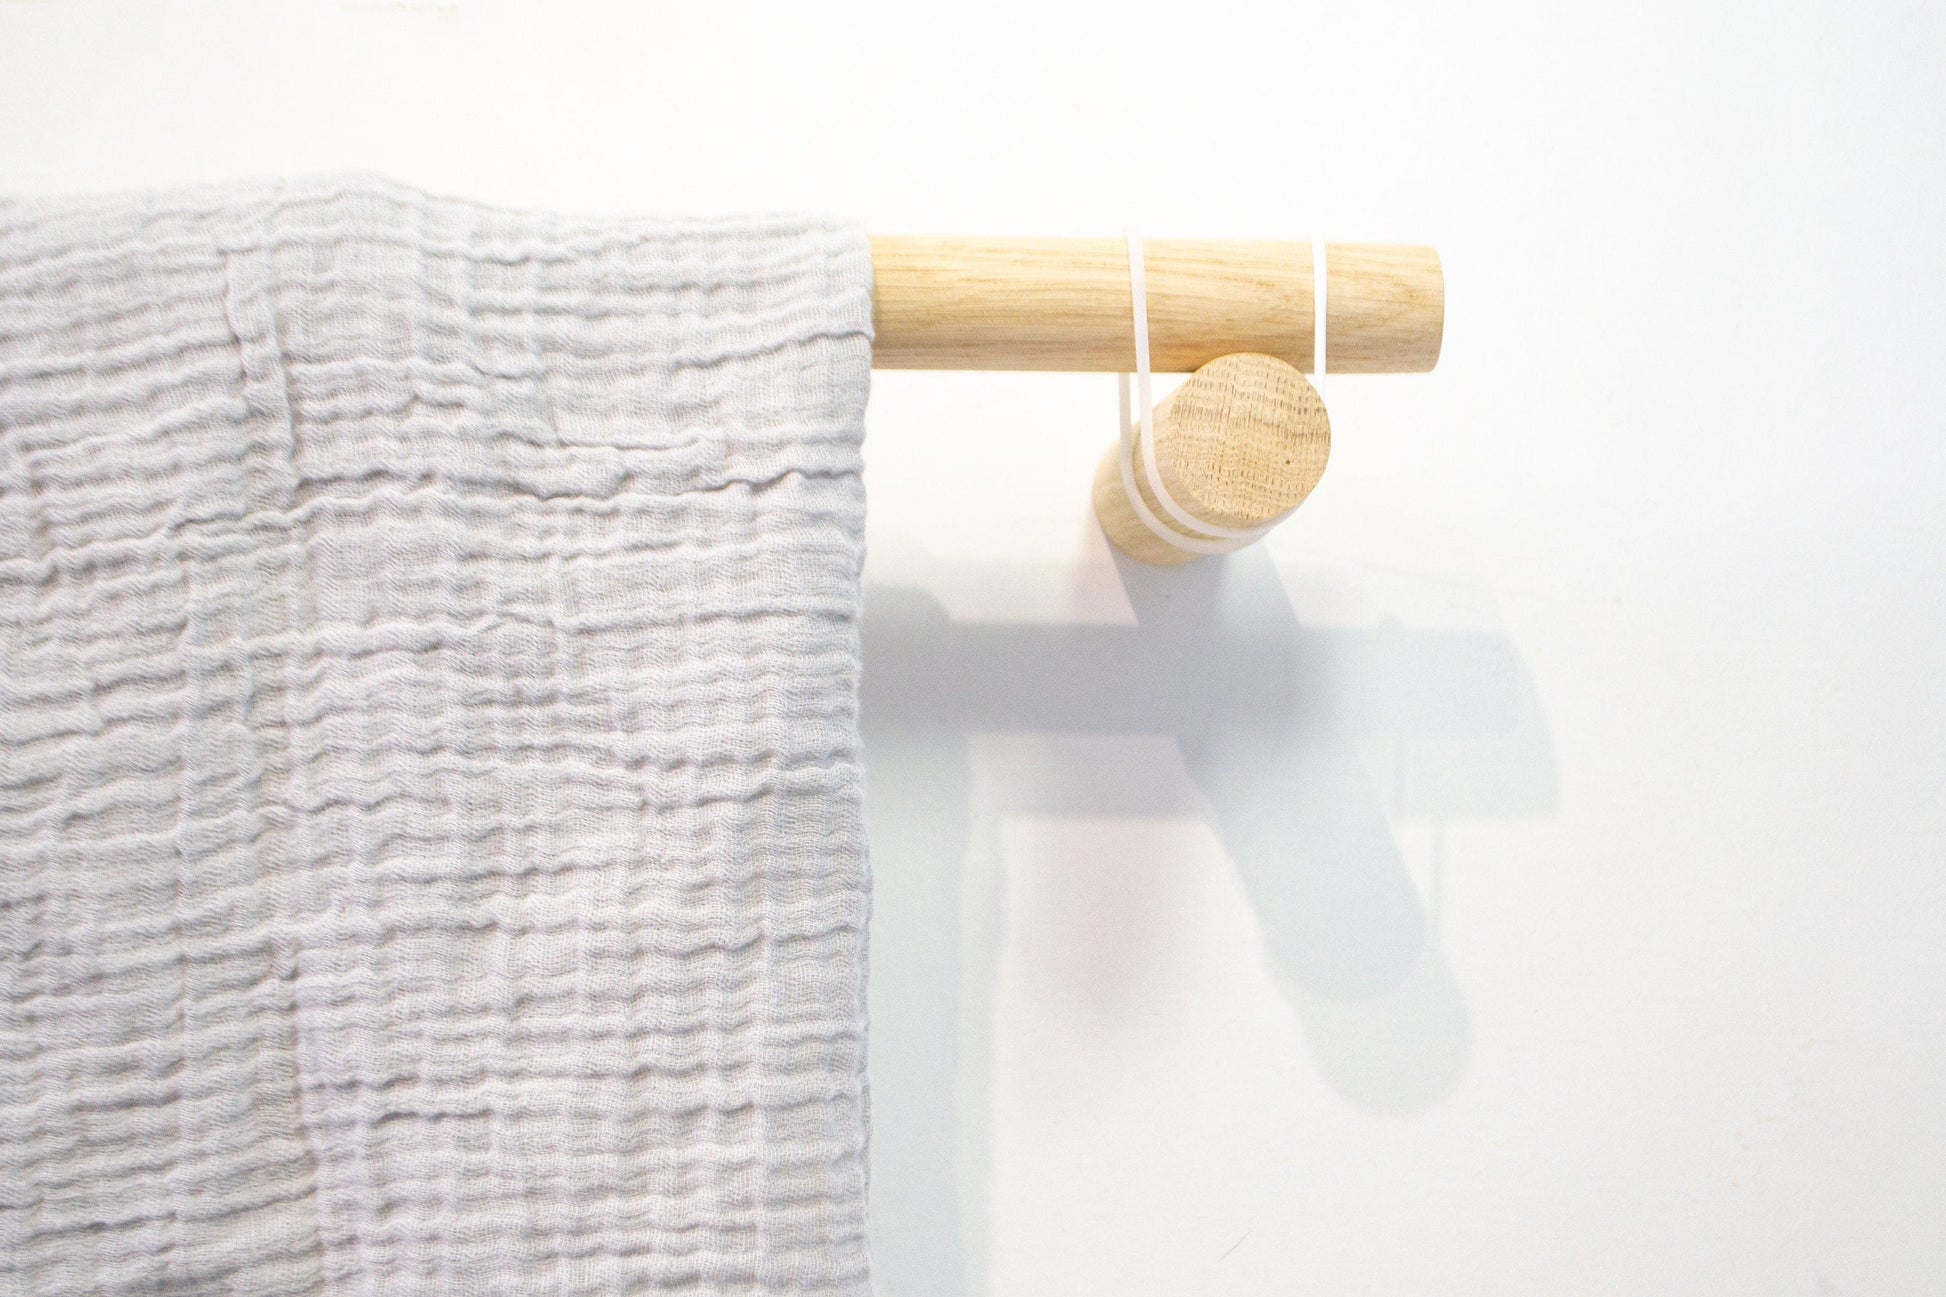 Wooden Towel Rail for Bathroom or Kitchen Towel Holder